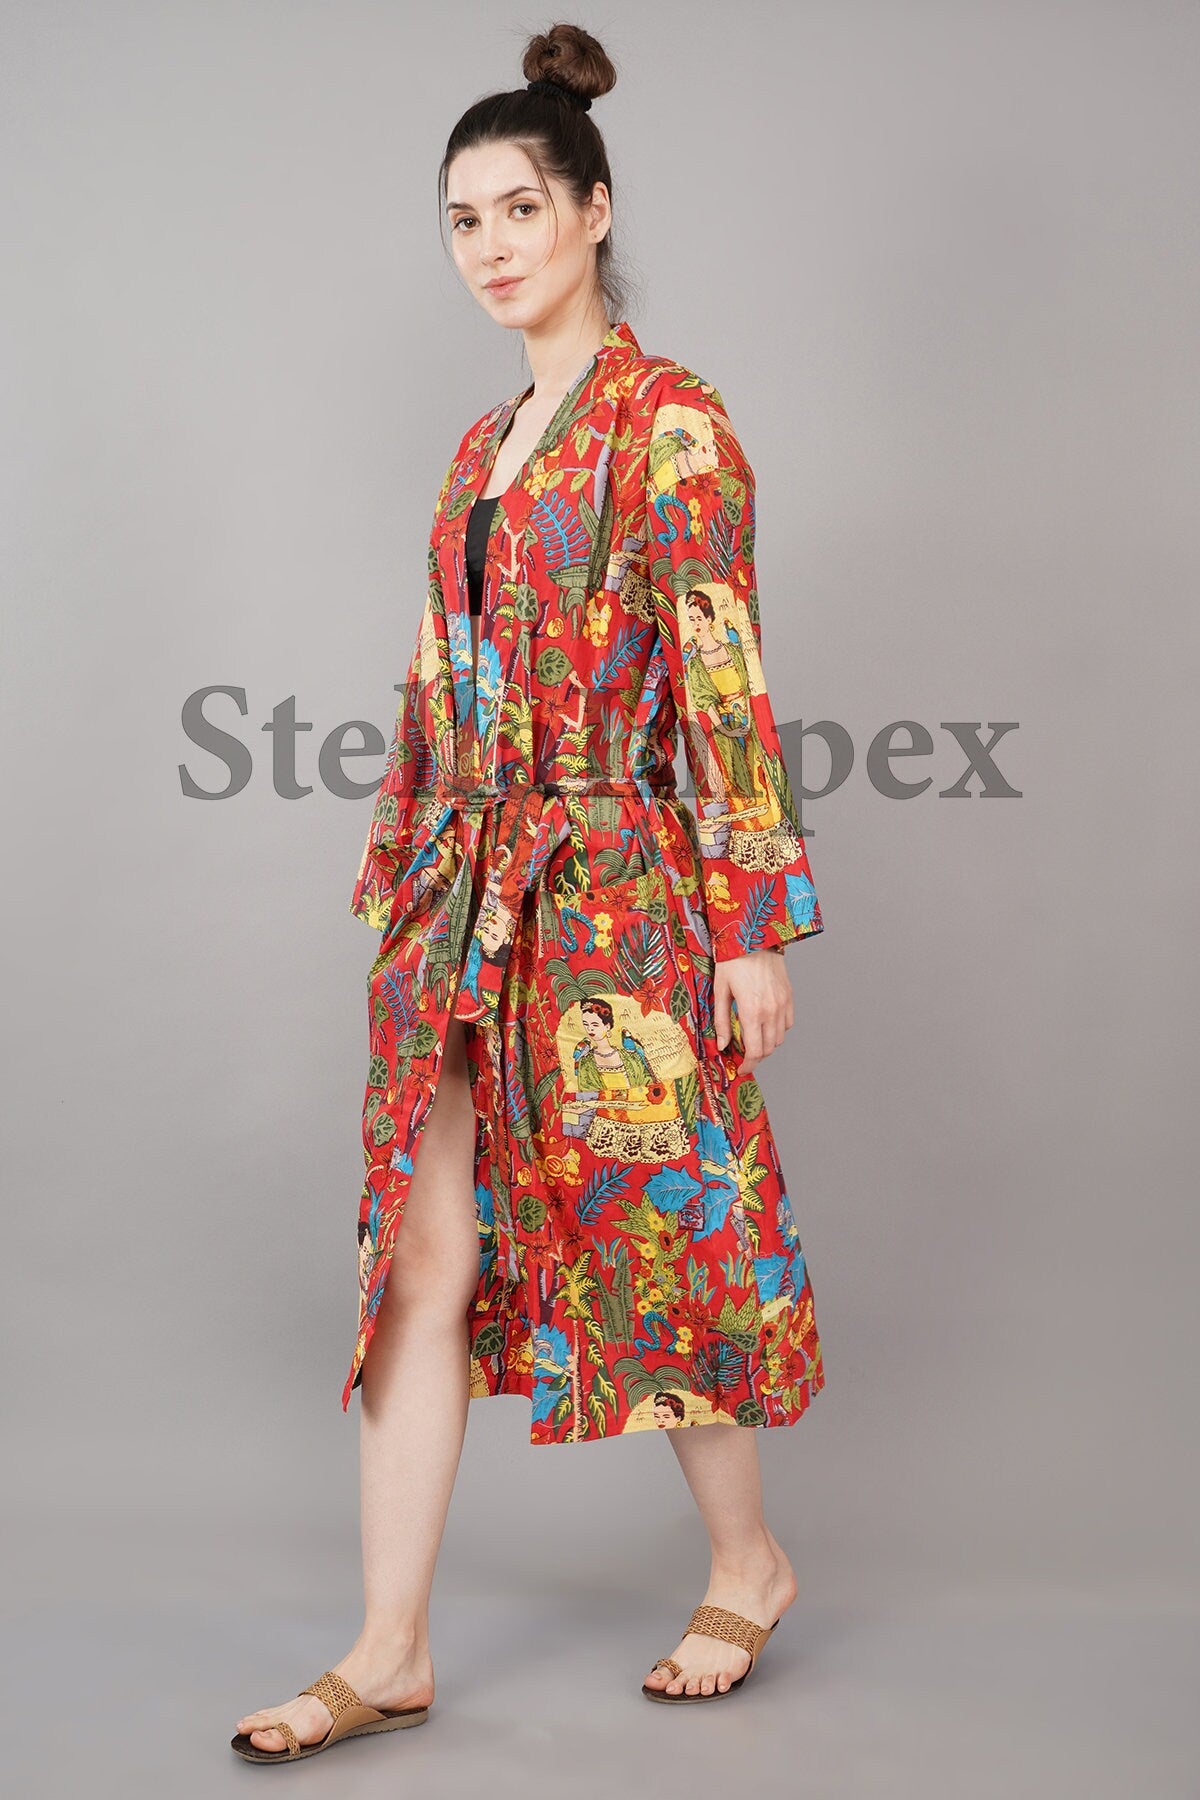 Cotton Kimono Robes for Women, Frida Kahlo Print Fabric, Soft and